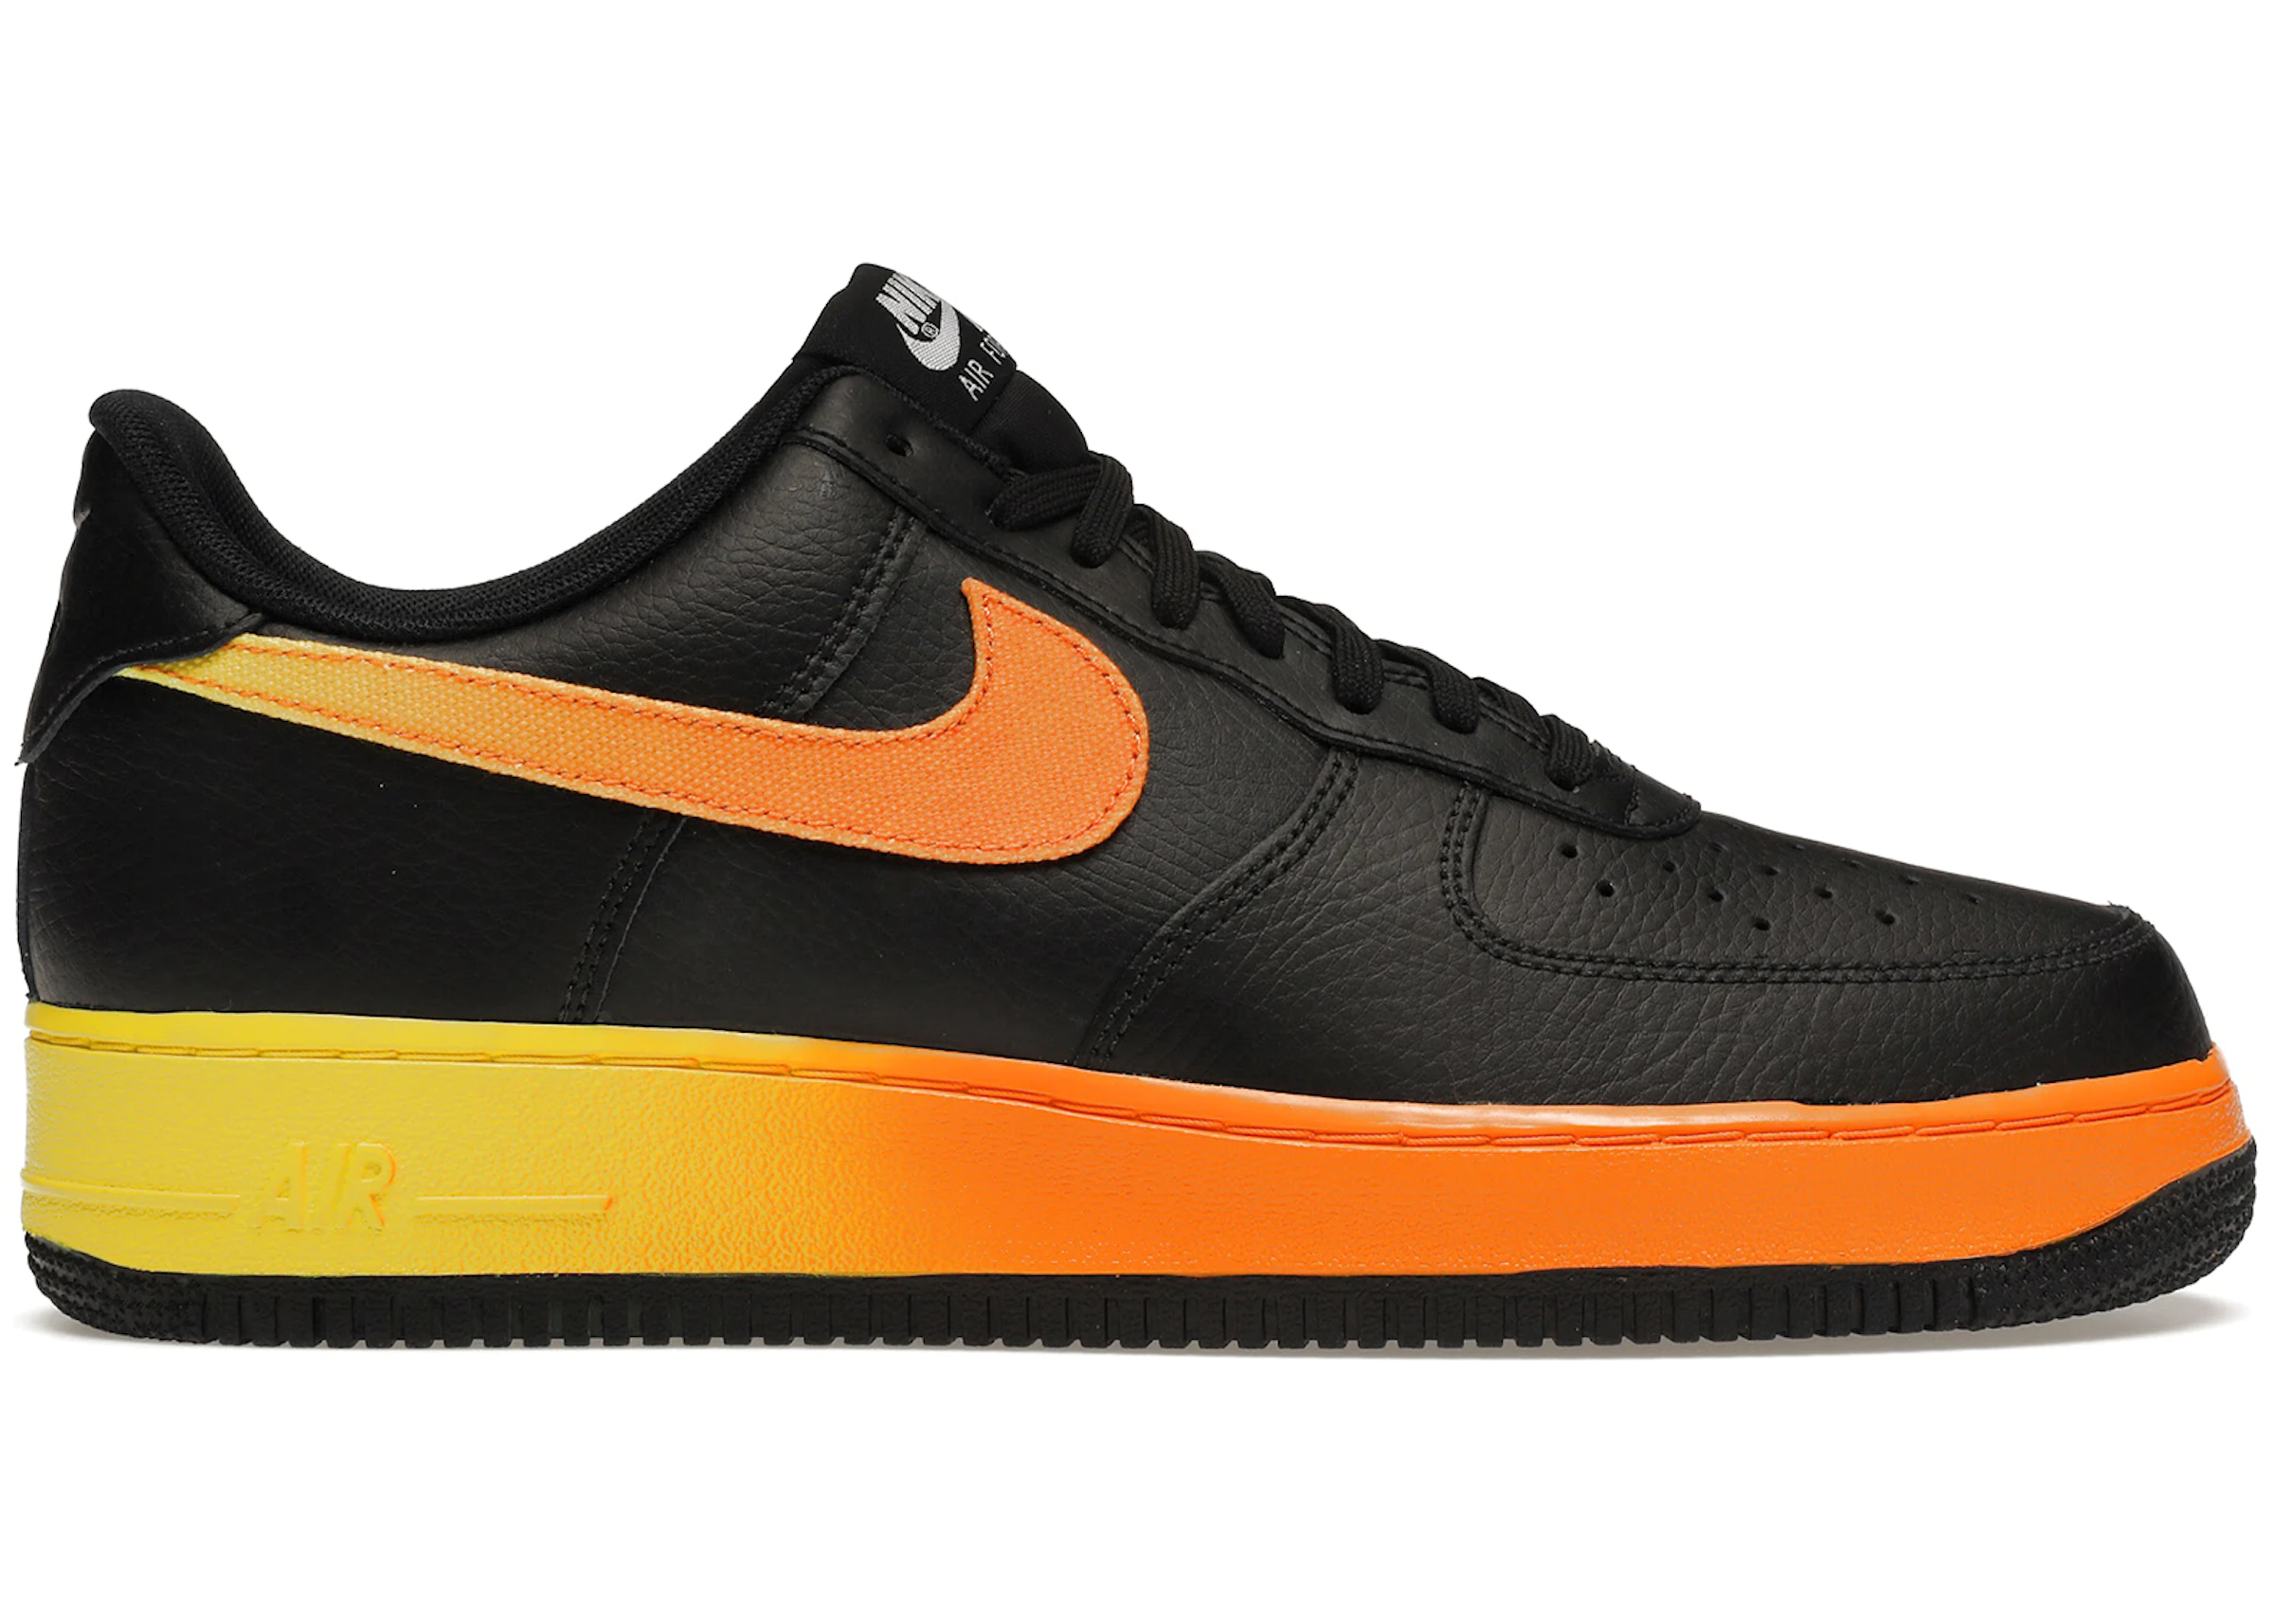 Prefix Lean look for Nike Air Force 1 Low Black Yellow Orange - CJ0524-001 - US